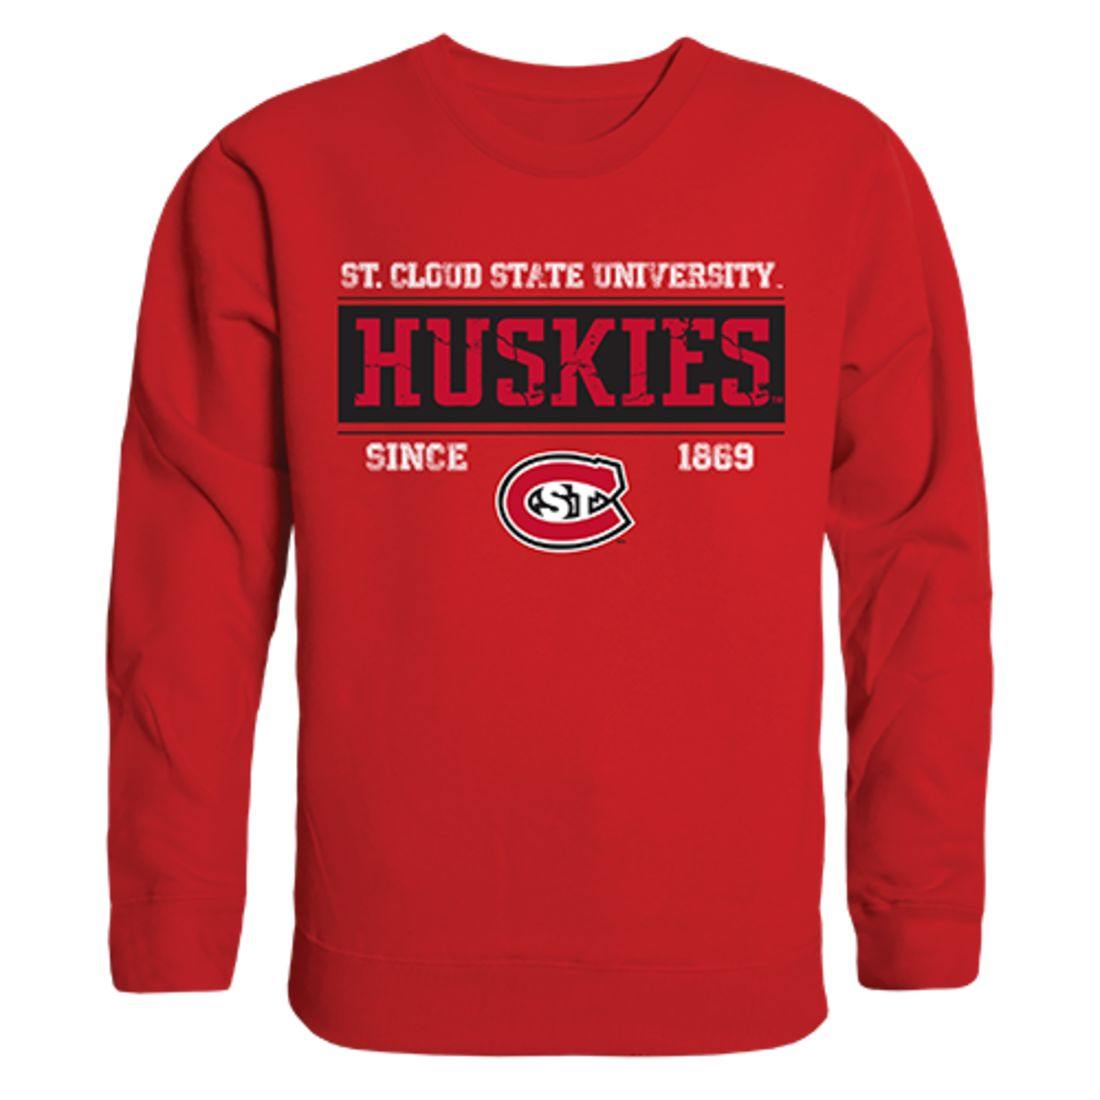 St. Cloud State University Huskies Established Crewneck Pullover Sweatshirt Sweater Red-Campus-Wardrobe